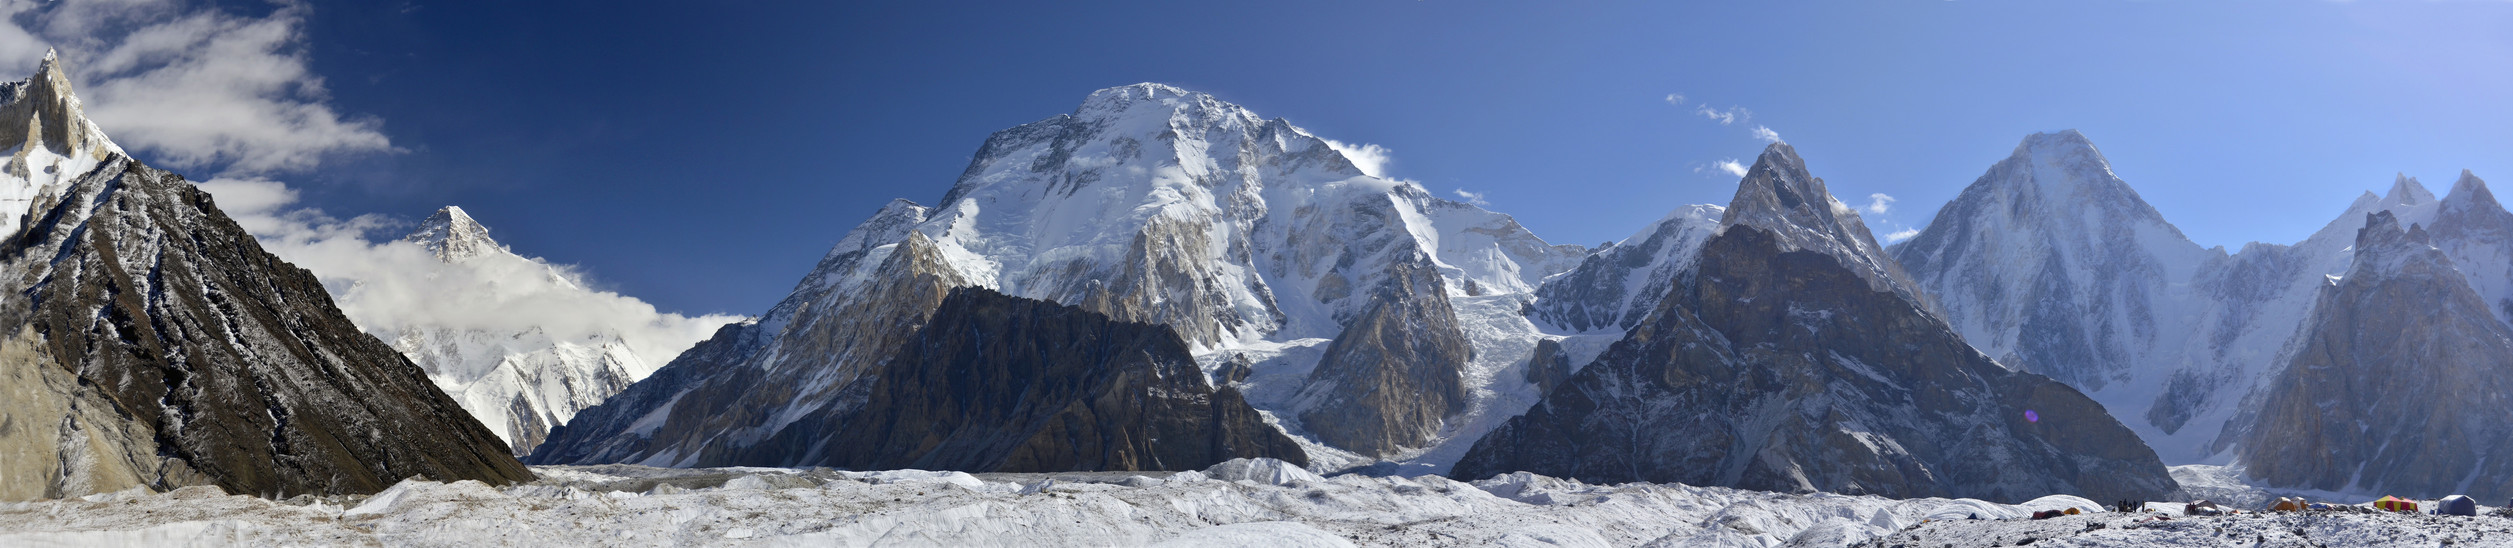 Panorámica del K2, Broad Peak y Gasherbrum IV desde Concordia, Karakorum. Foto:PabloFR